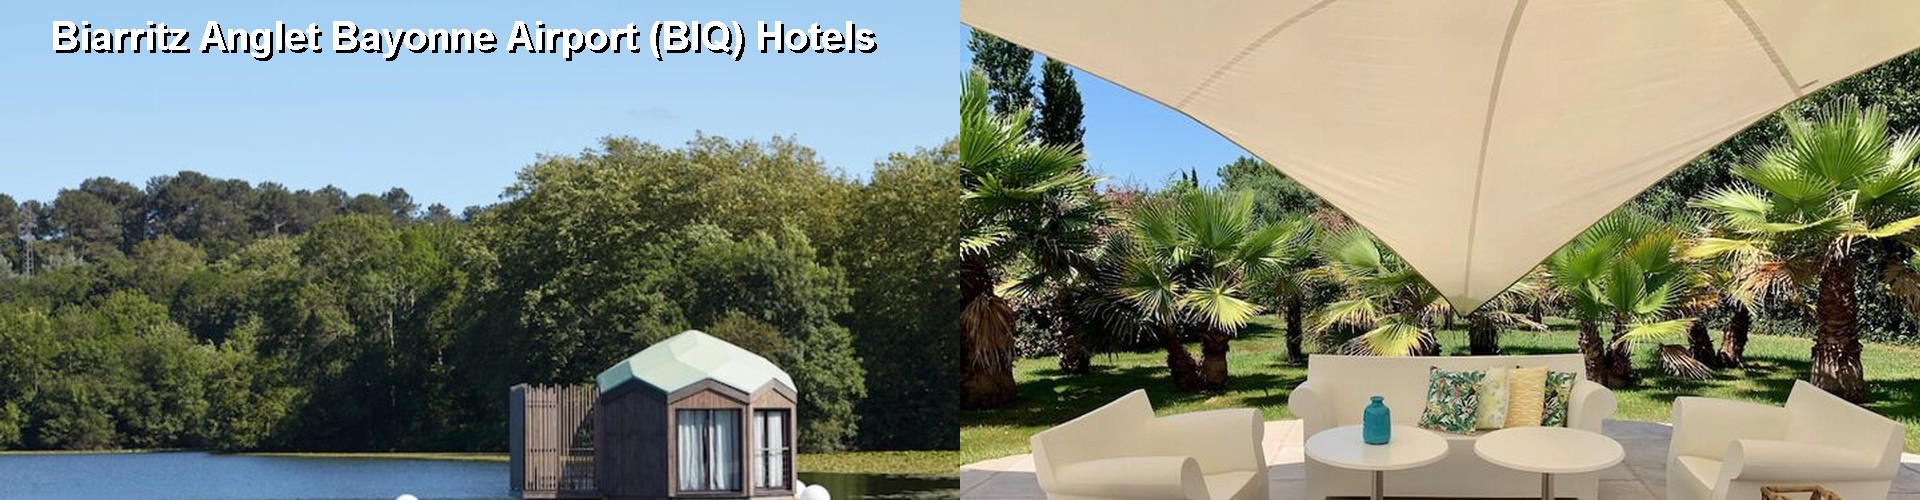 5 Best Hotels near Biarritz Anglet Bayonne Airport (BIQ)